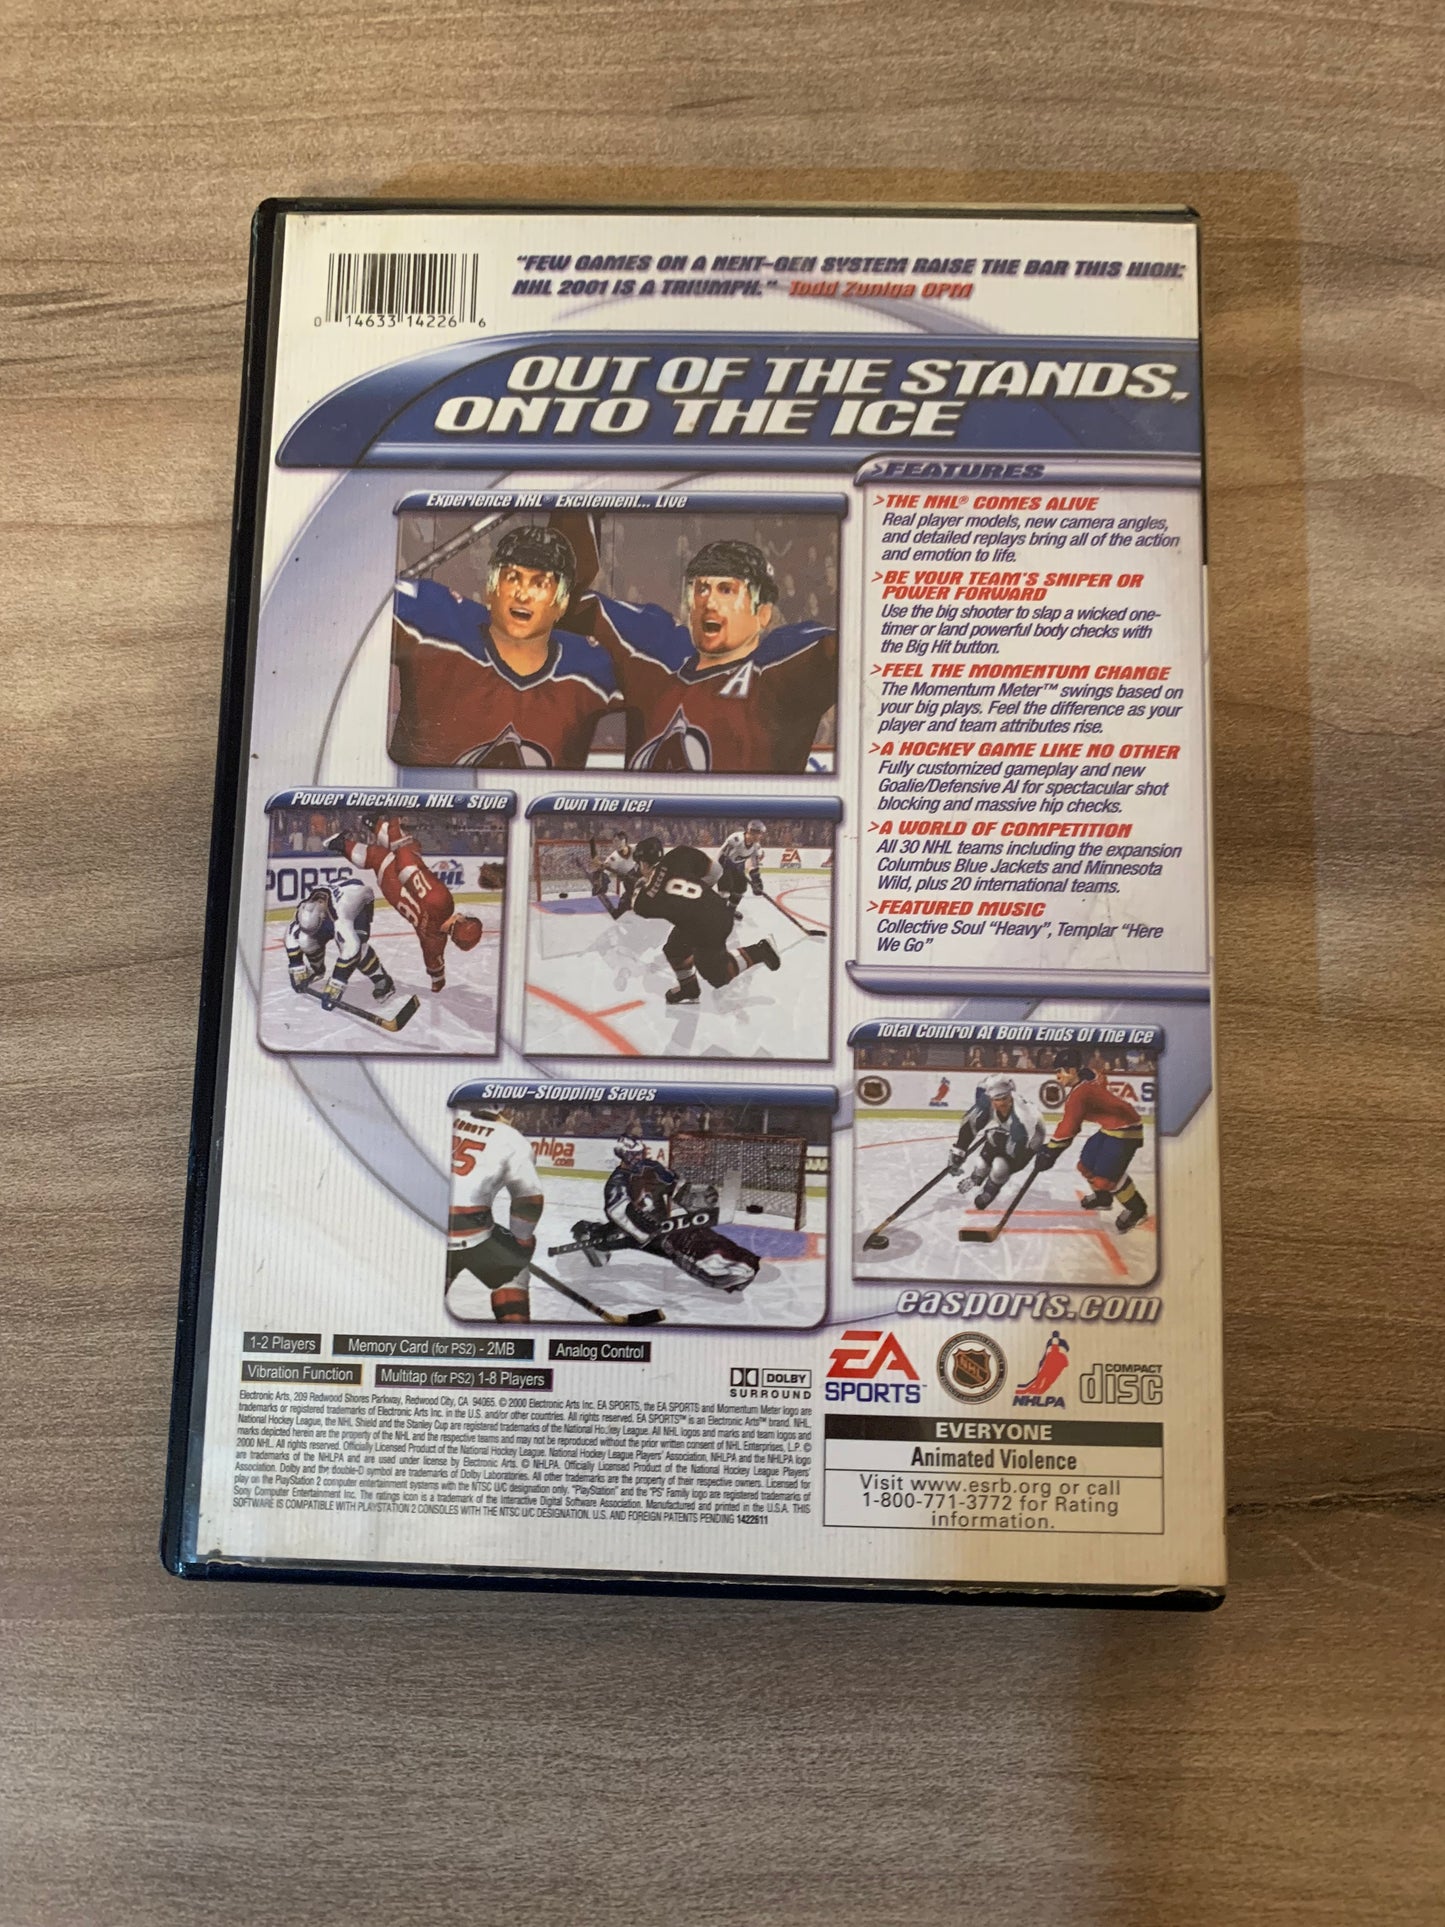 SONY PLAYSTATiON 2 [PS2] | NHL 2001